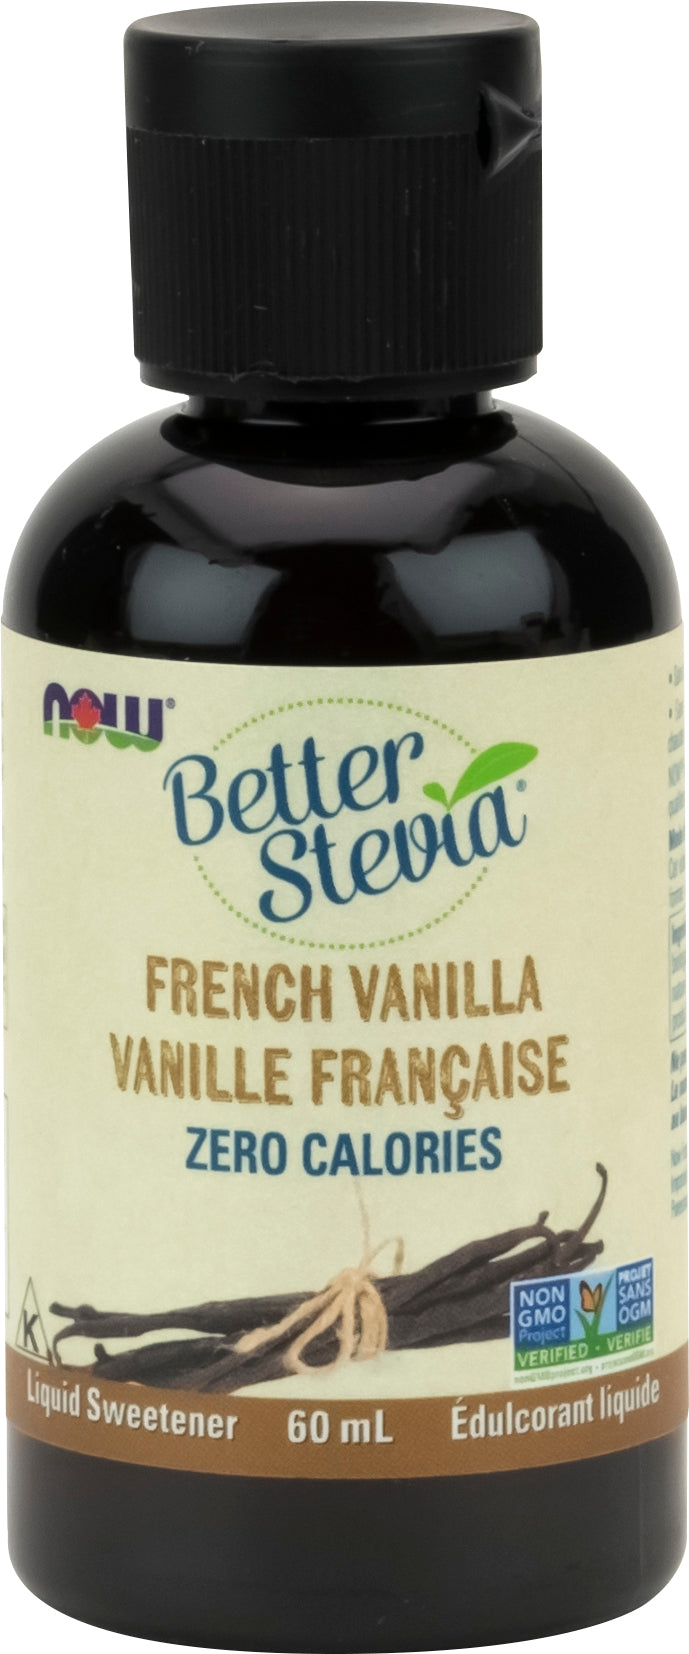 NOW Better Stevia Liquid French Vanilla 60ml